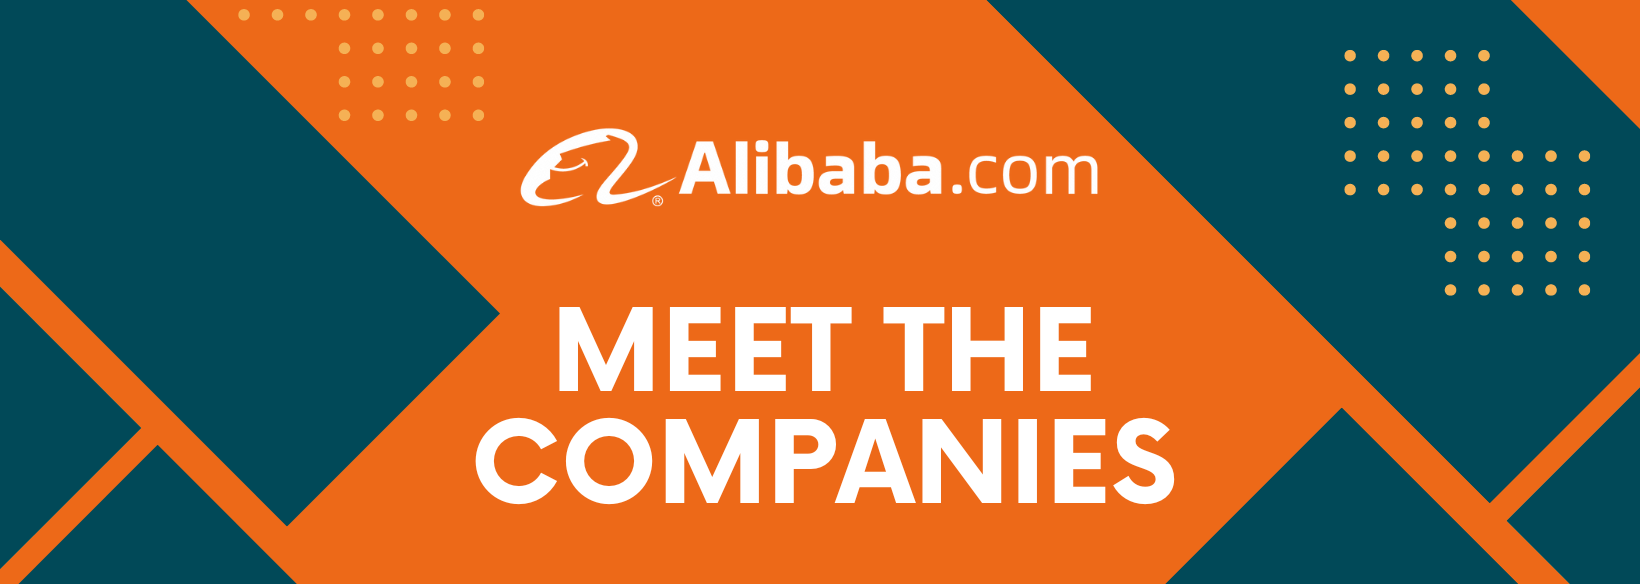 Immagine evento Alibaba.com Meet the companies